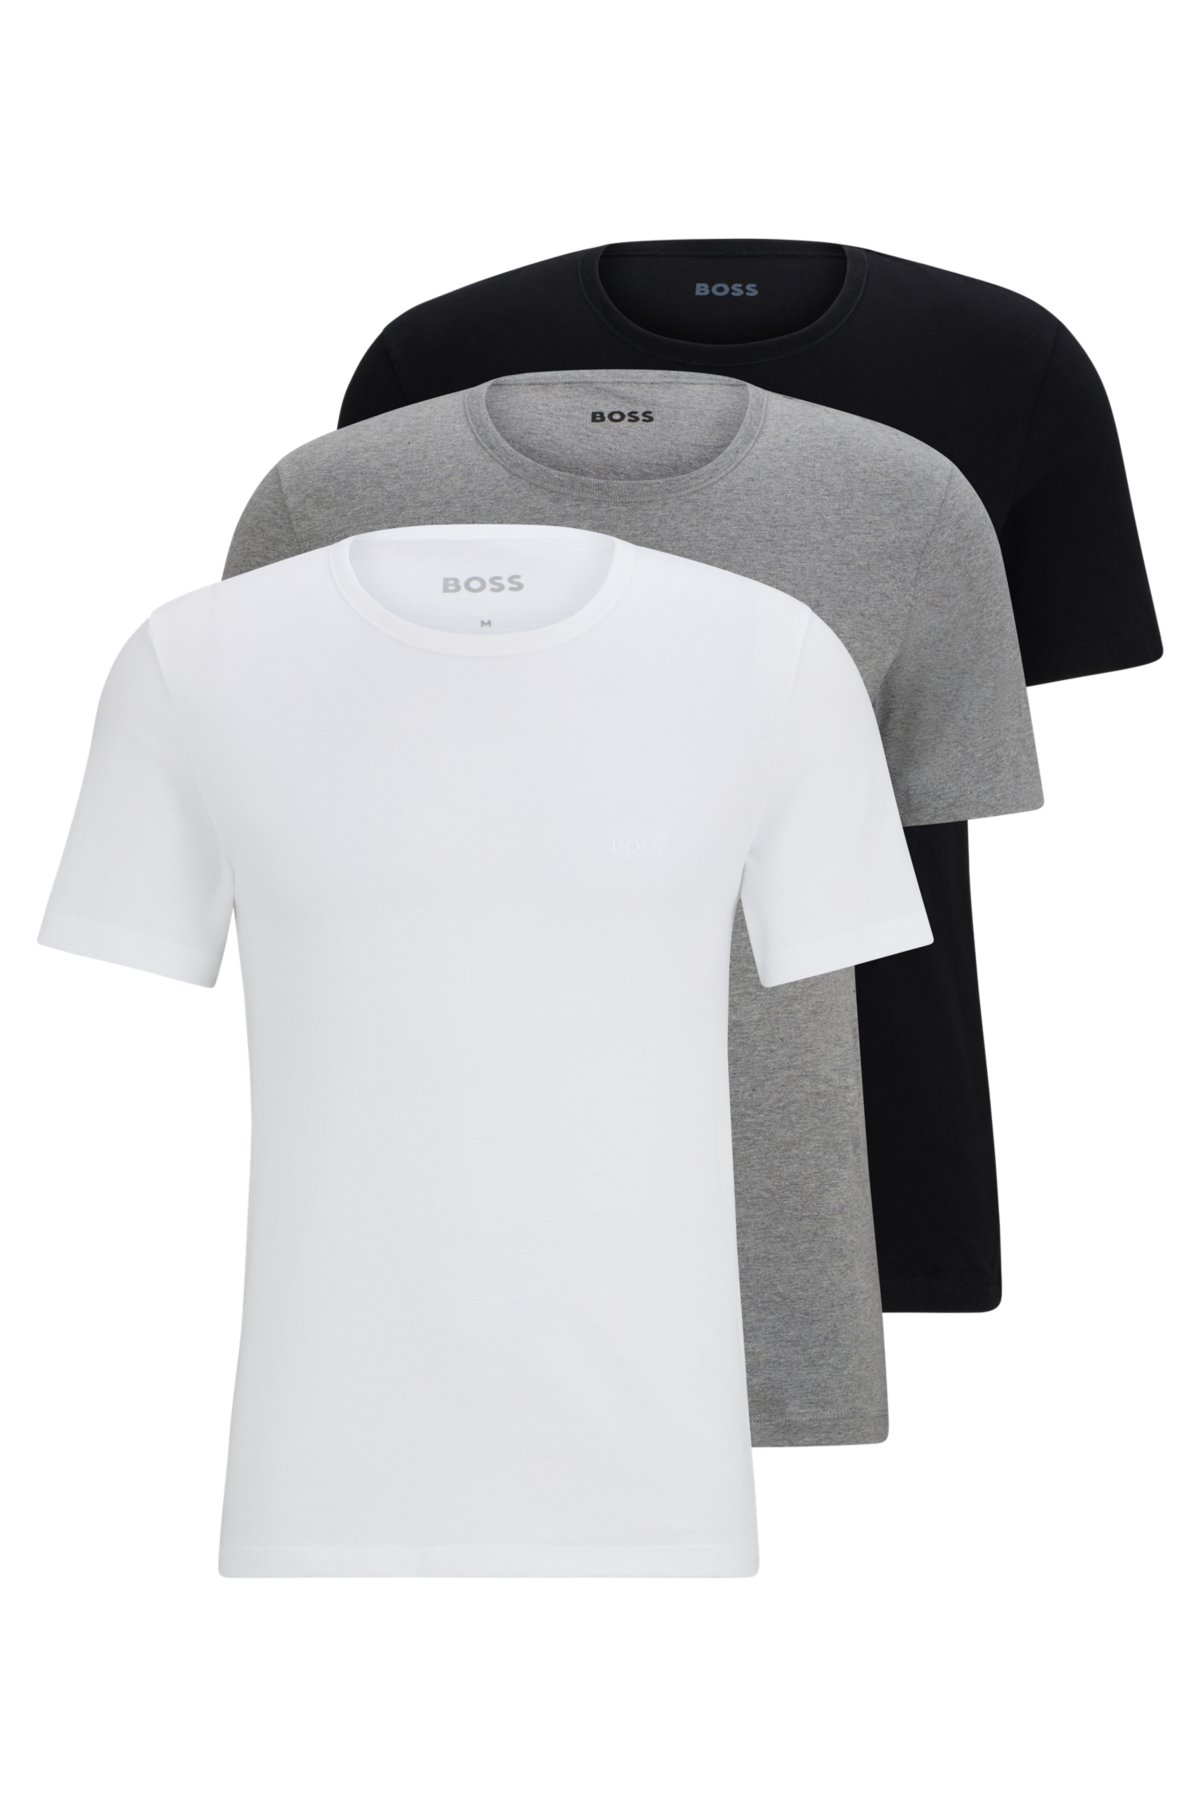 Boys' Supersoft Short Sleeve Crew T-Shirt, 3 Pack